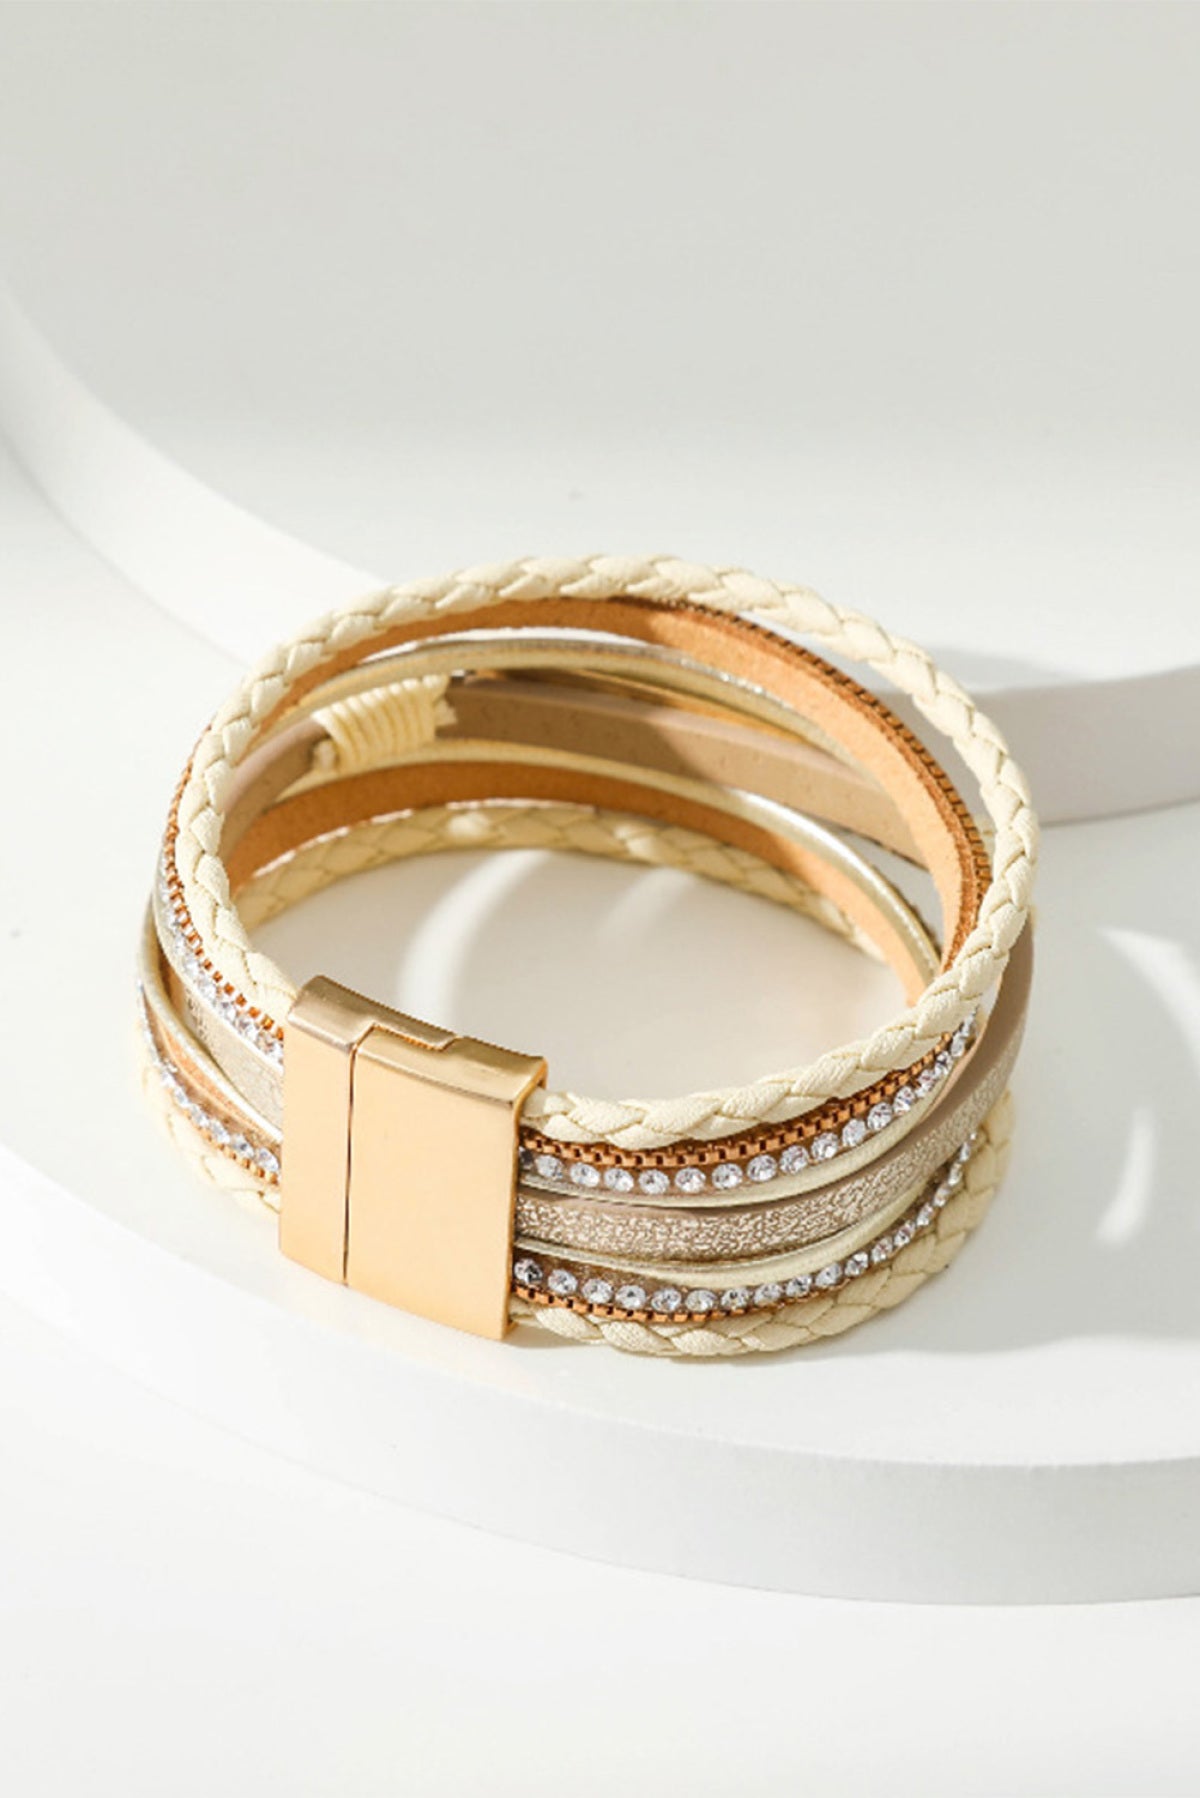 BLESSED Rhinestone Leather Layered Bracelet